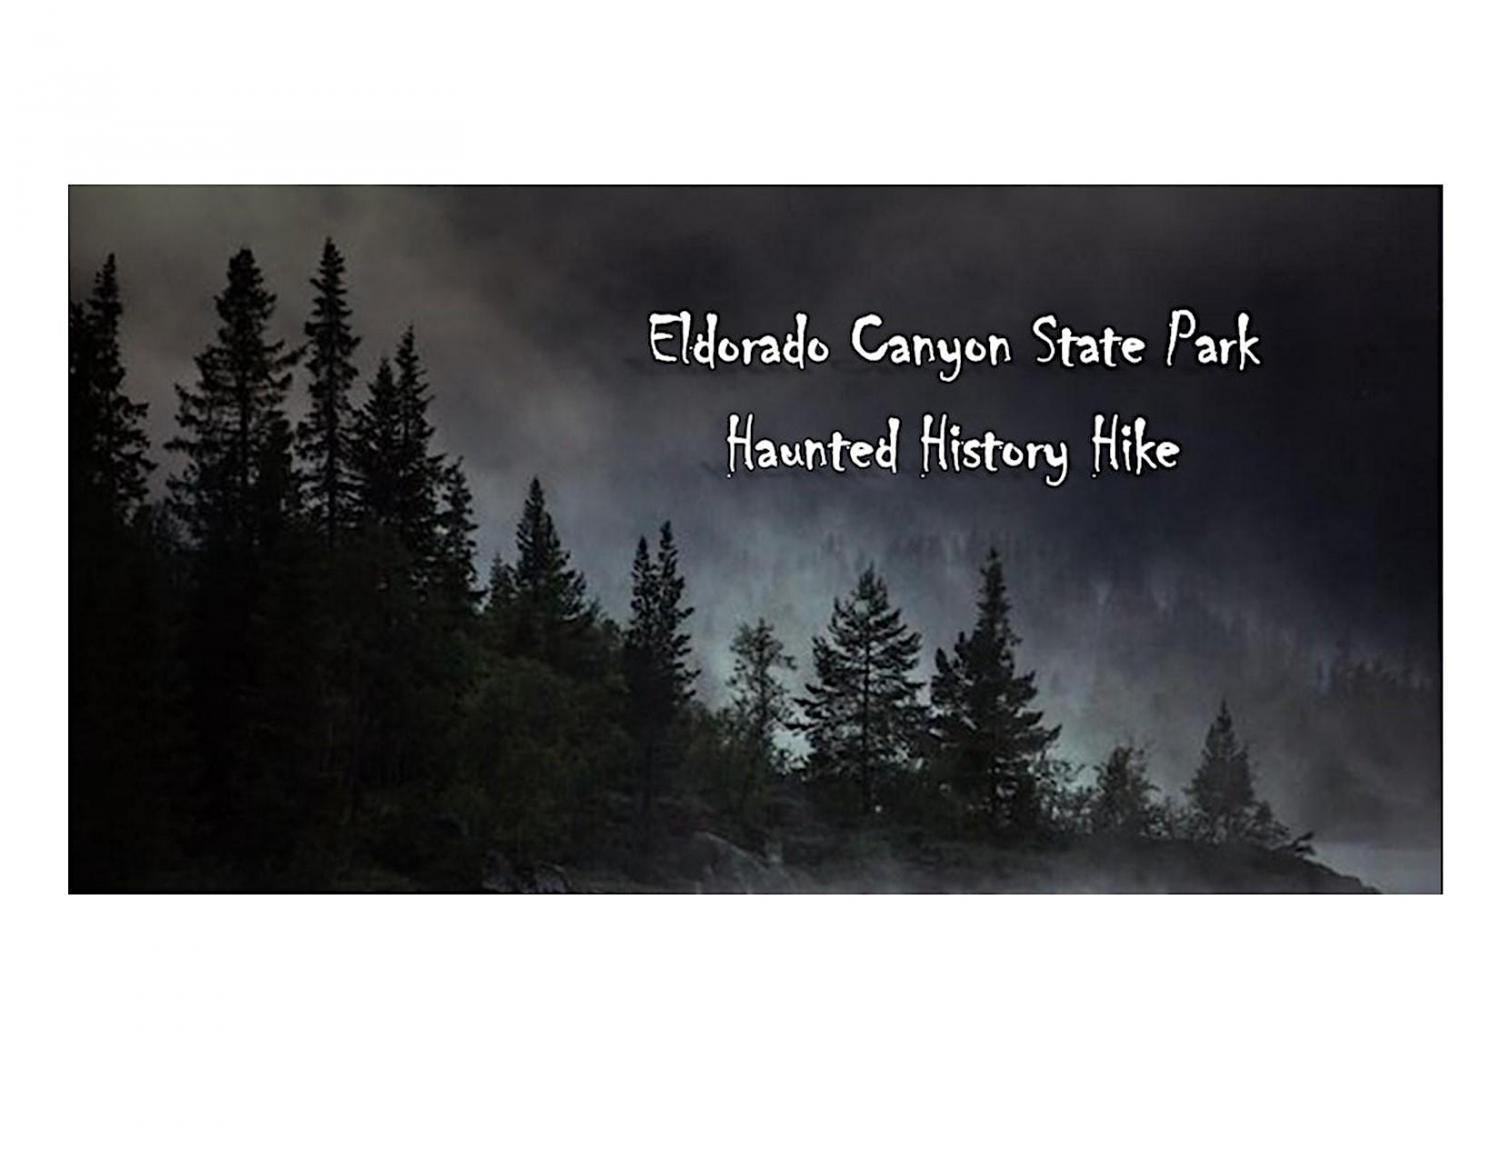 Eldorado Canyon State Park Haunted History Hike
Sat Oct 8, 6:00 PM - Sat Oct 8, 7:00 PM